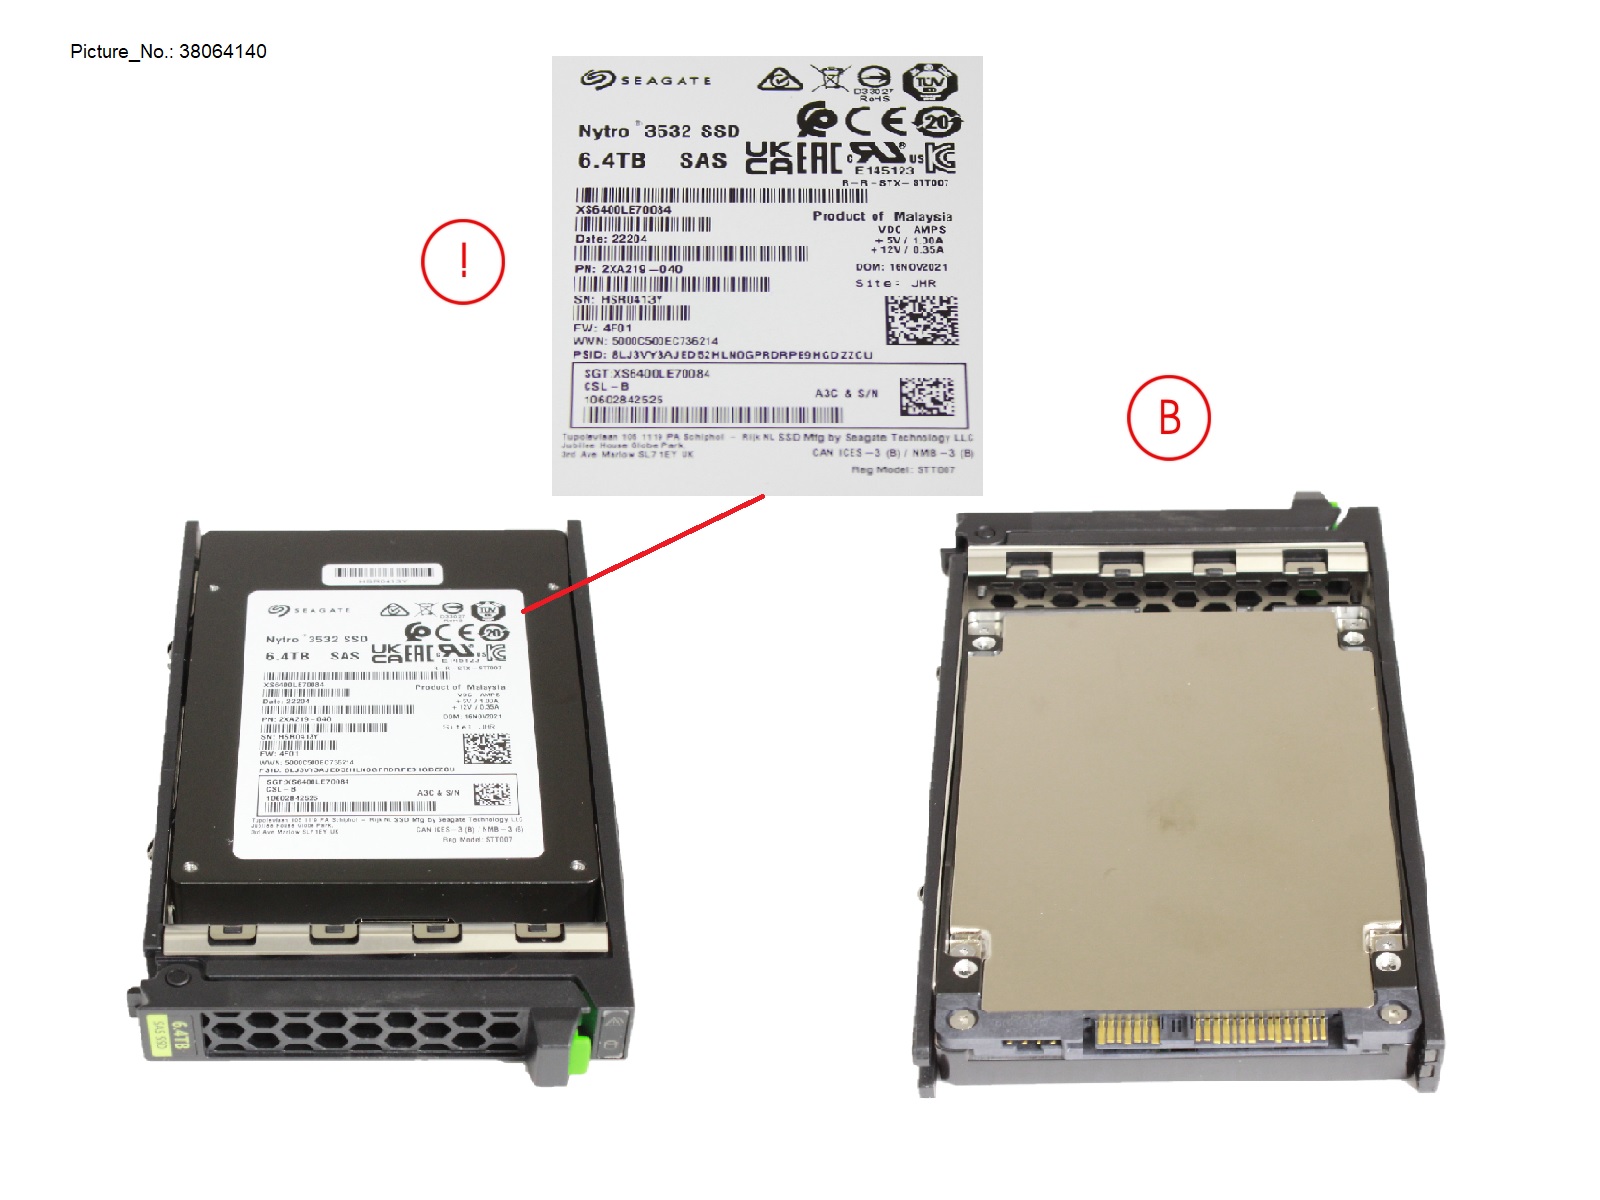 SSD SAS 12G MU 6.4TB IN SFF SLIM